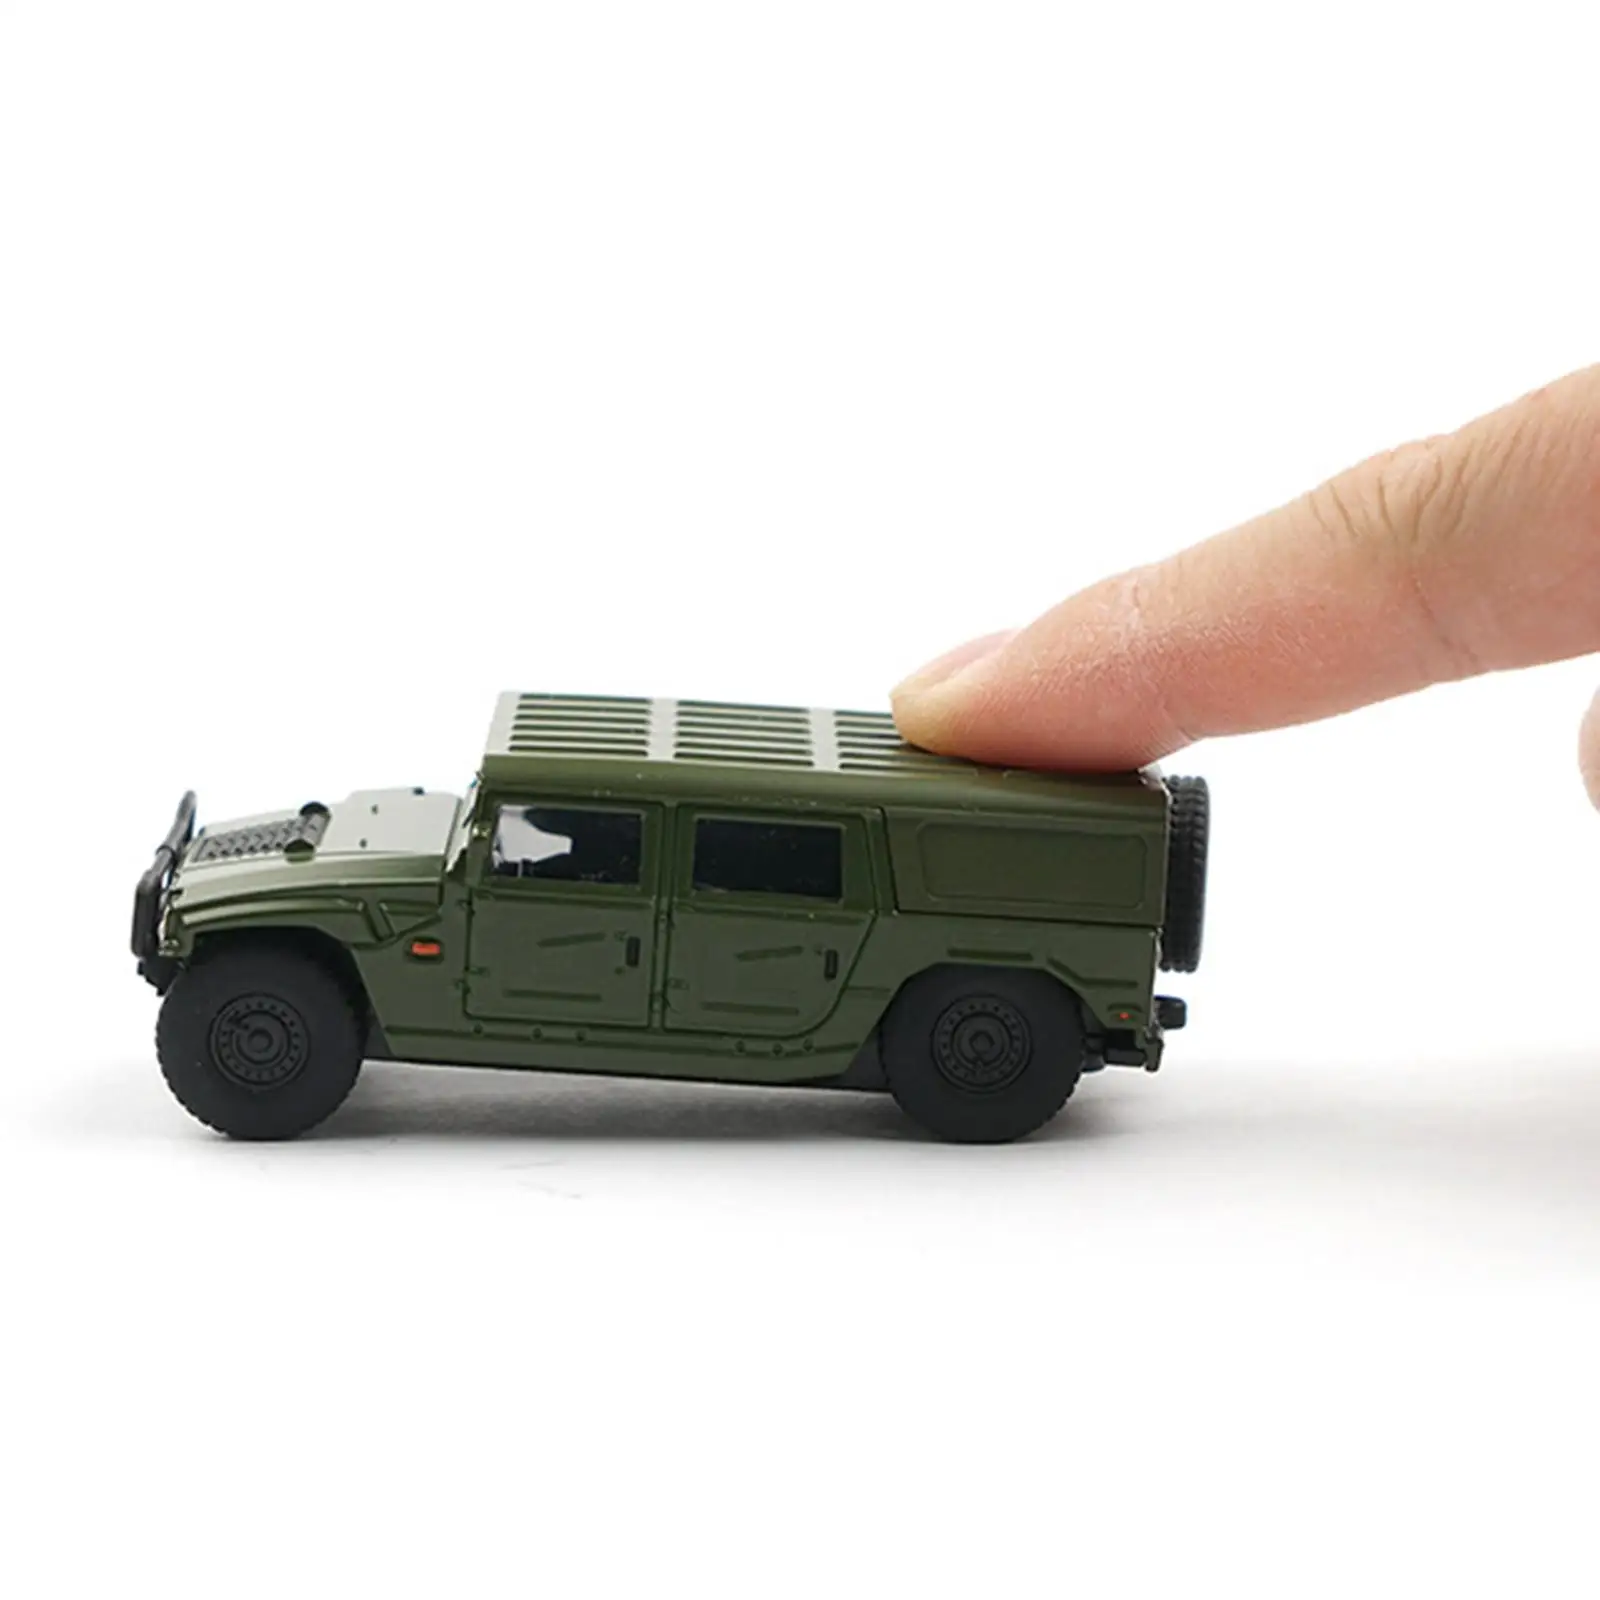 1:64 Diorama Street Car Model Mini Vehicles Toys for DIY Scene Diorama Decor